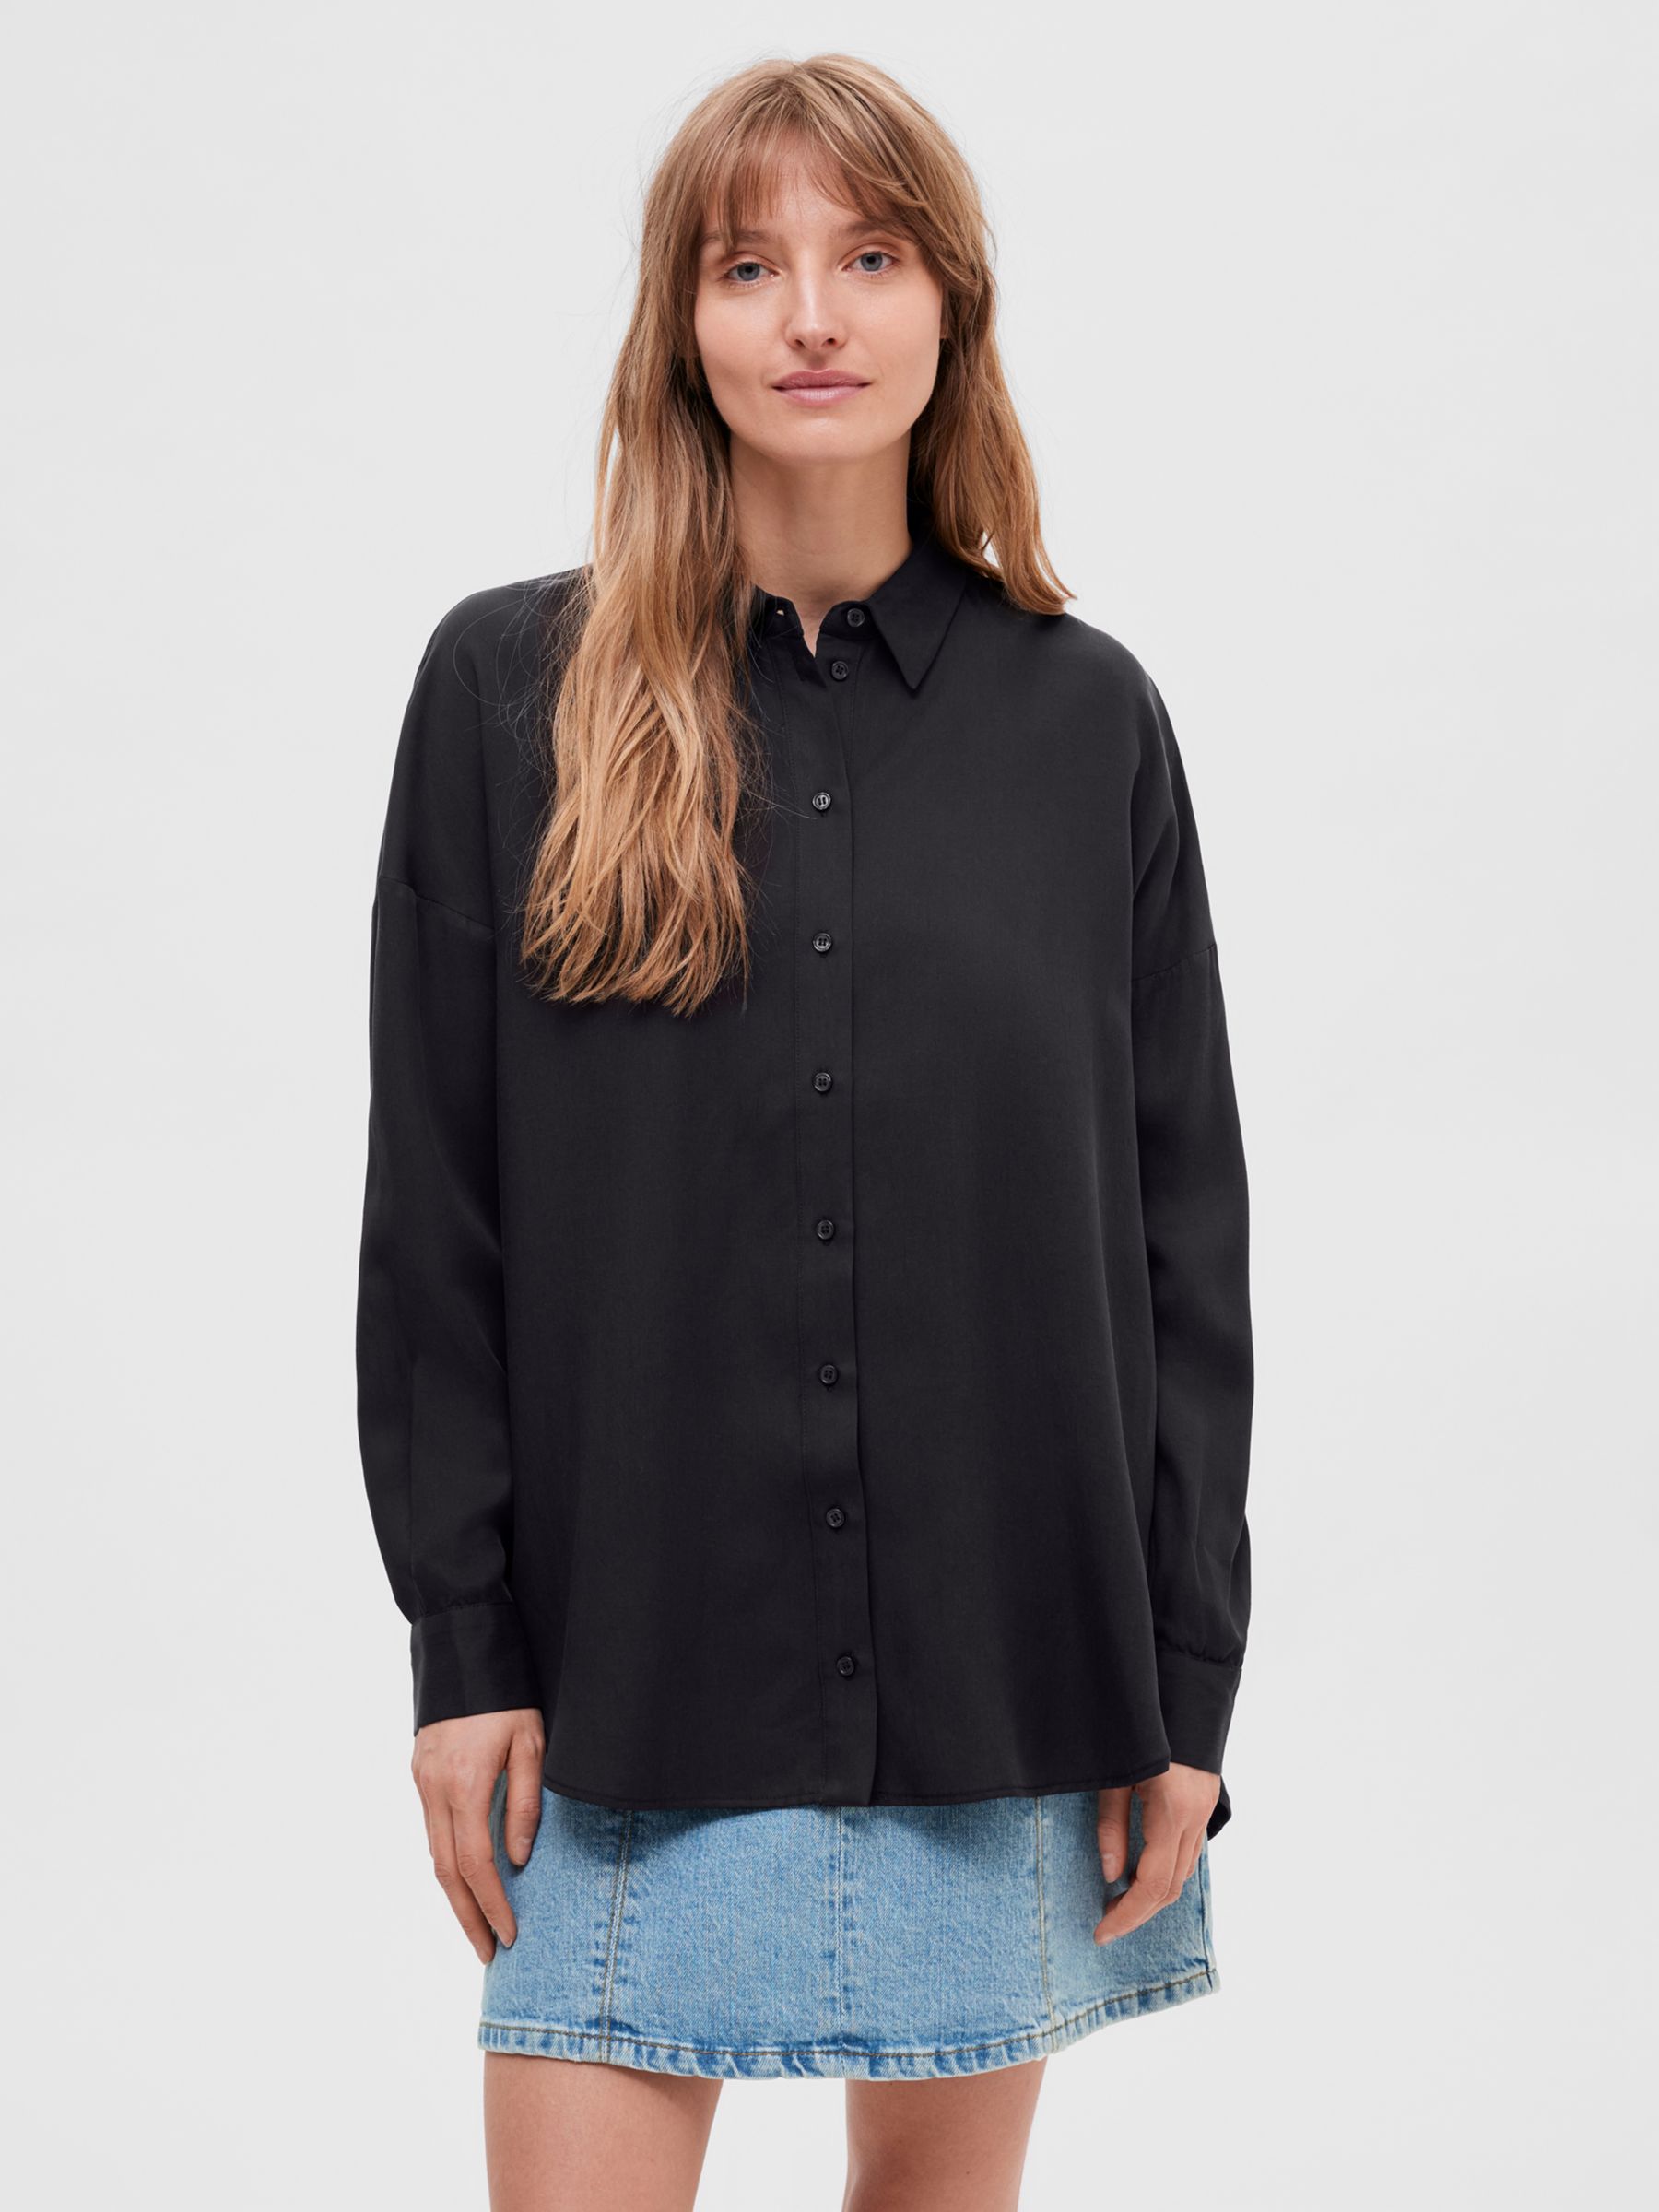 SELECTED FEMME Long Sleeve Shirt, Black, 34